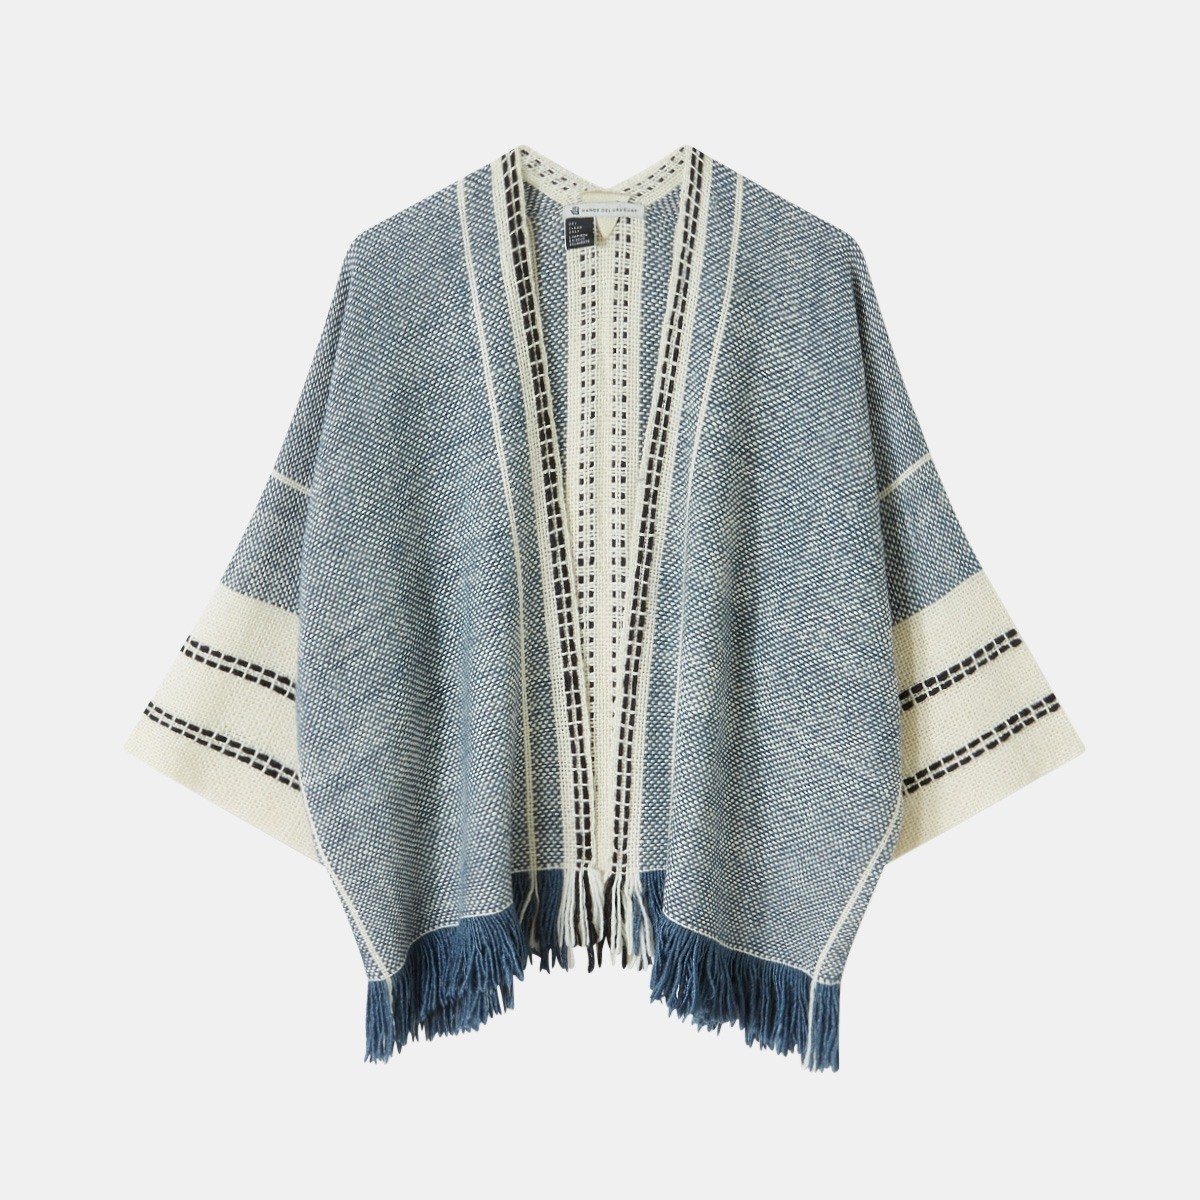 Aessai Knitwear Andes Wrap Jacket in Blue – merino wool – One Size – Aessai